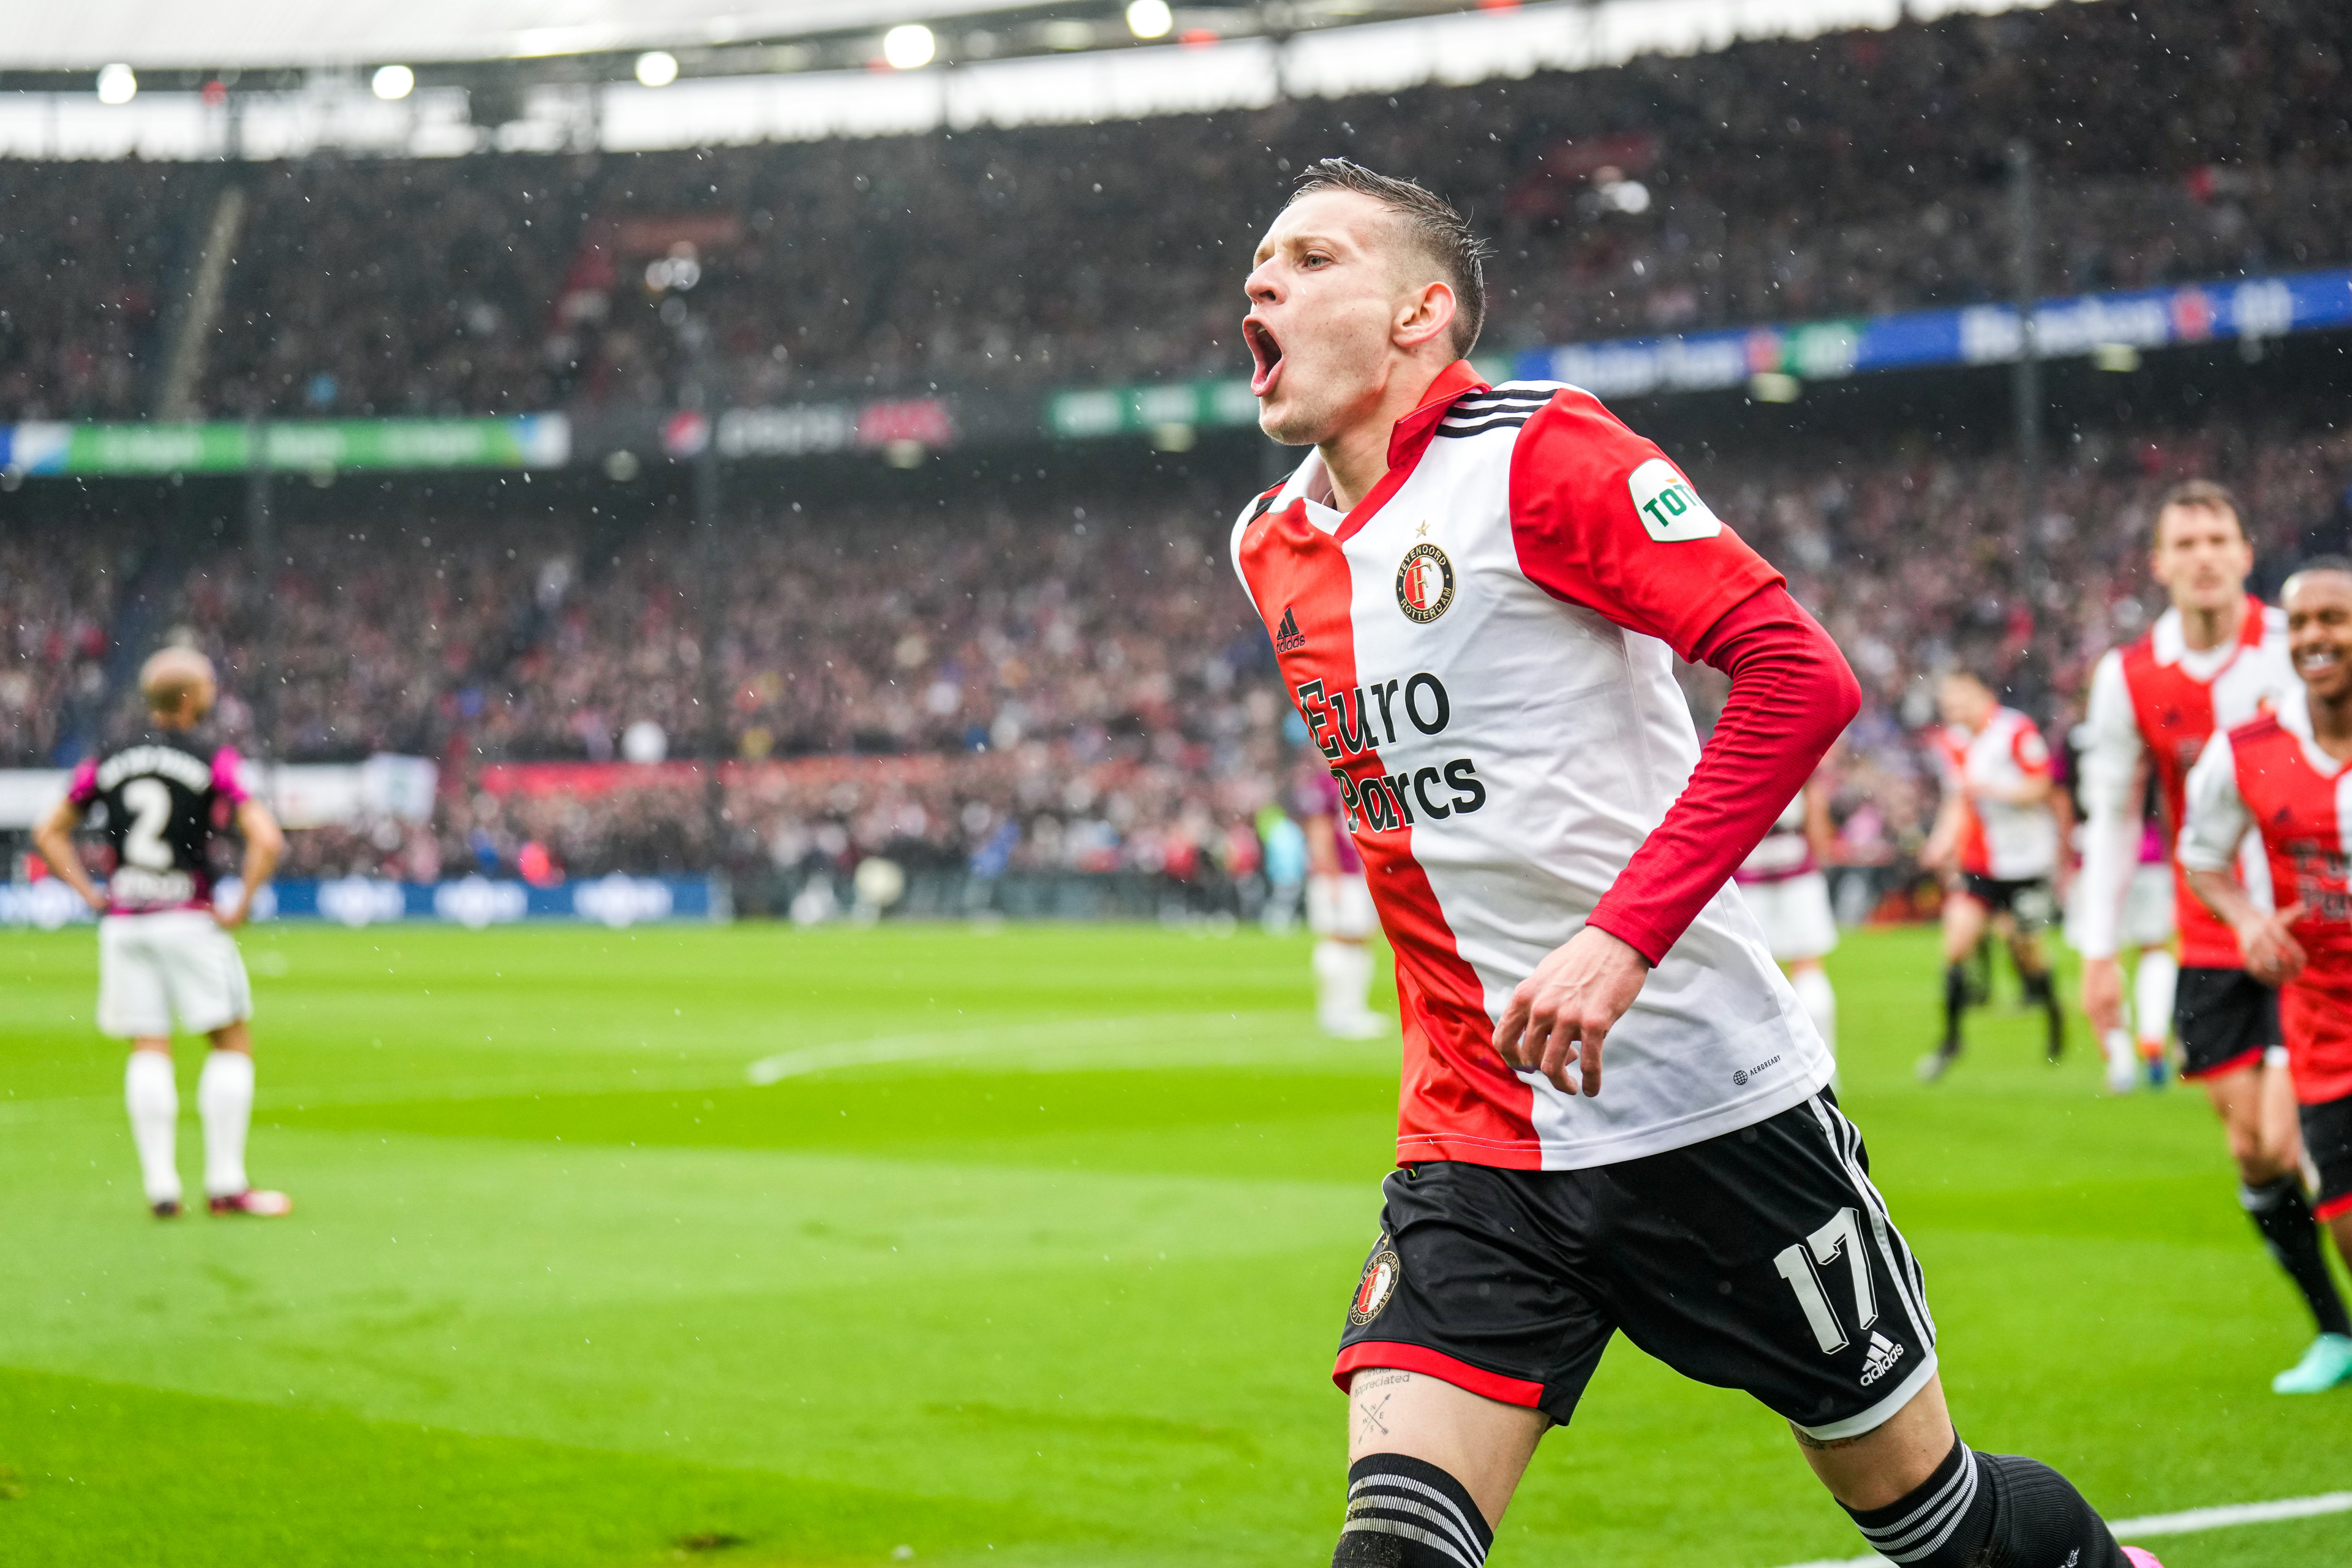 Feyenoord - FC Utrecht • 3 - 1 [FT]